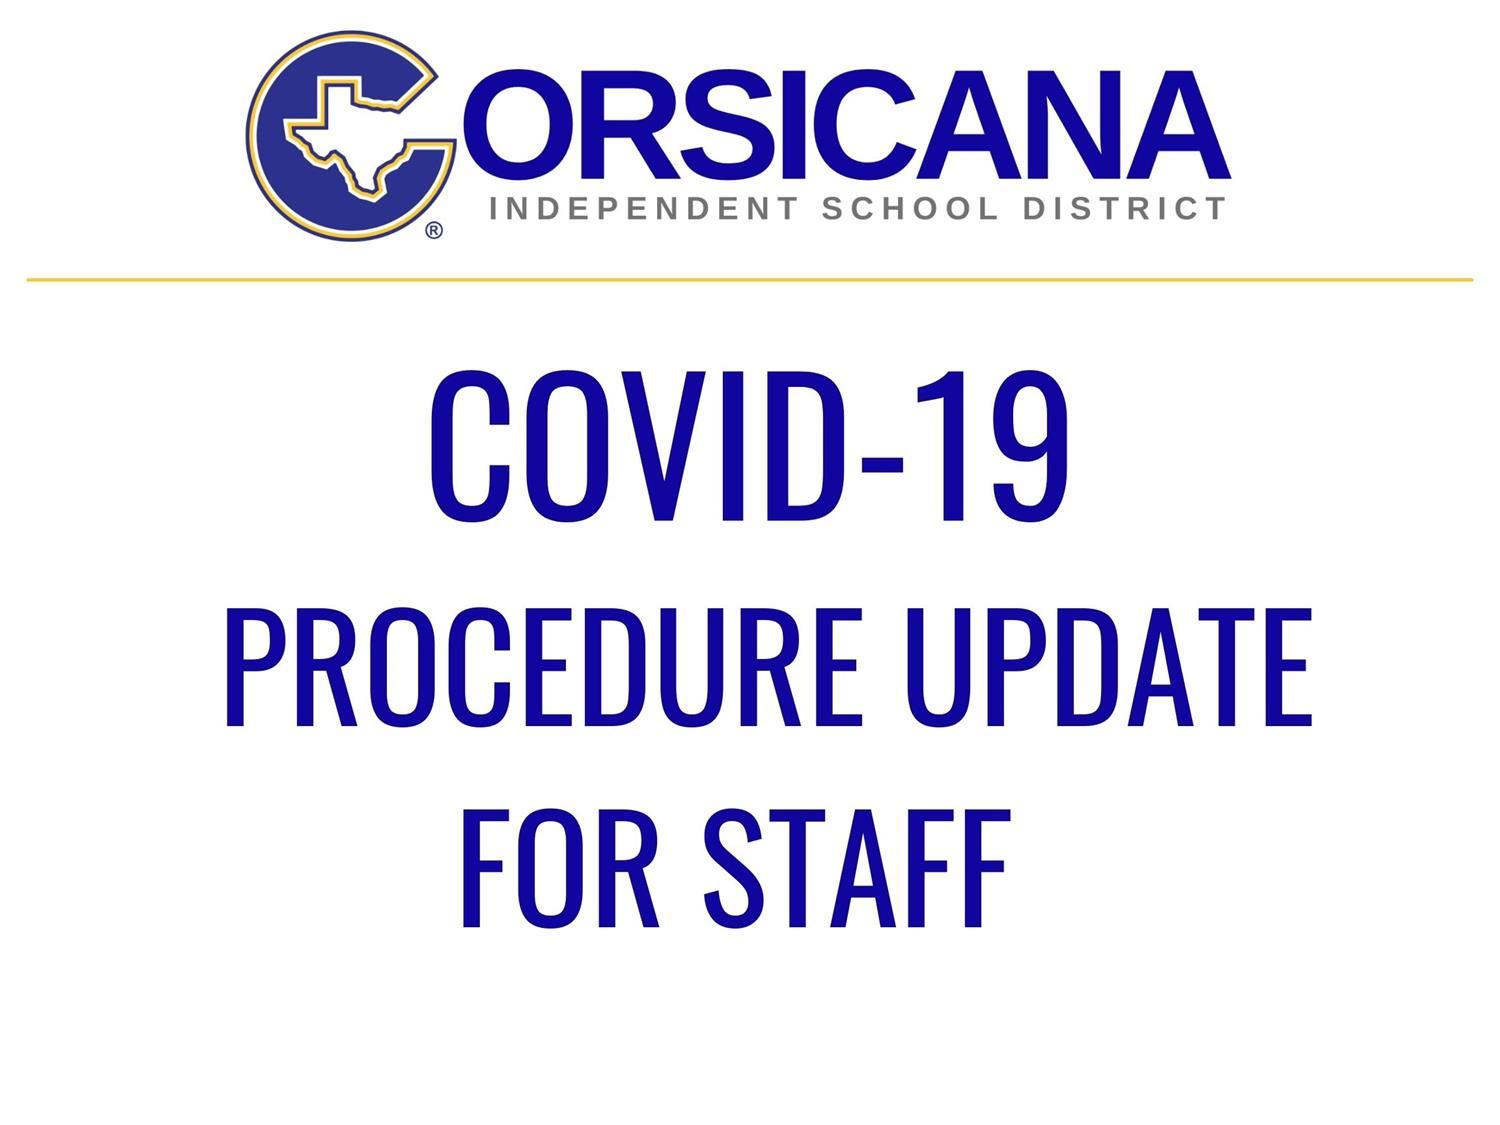  COVID-19 Procedure Update for Staff